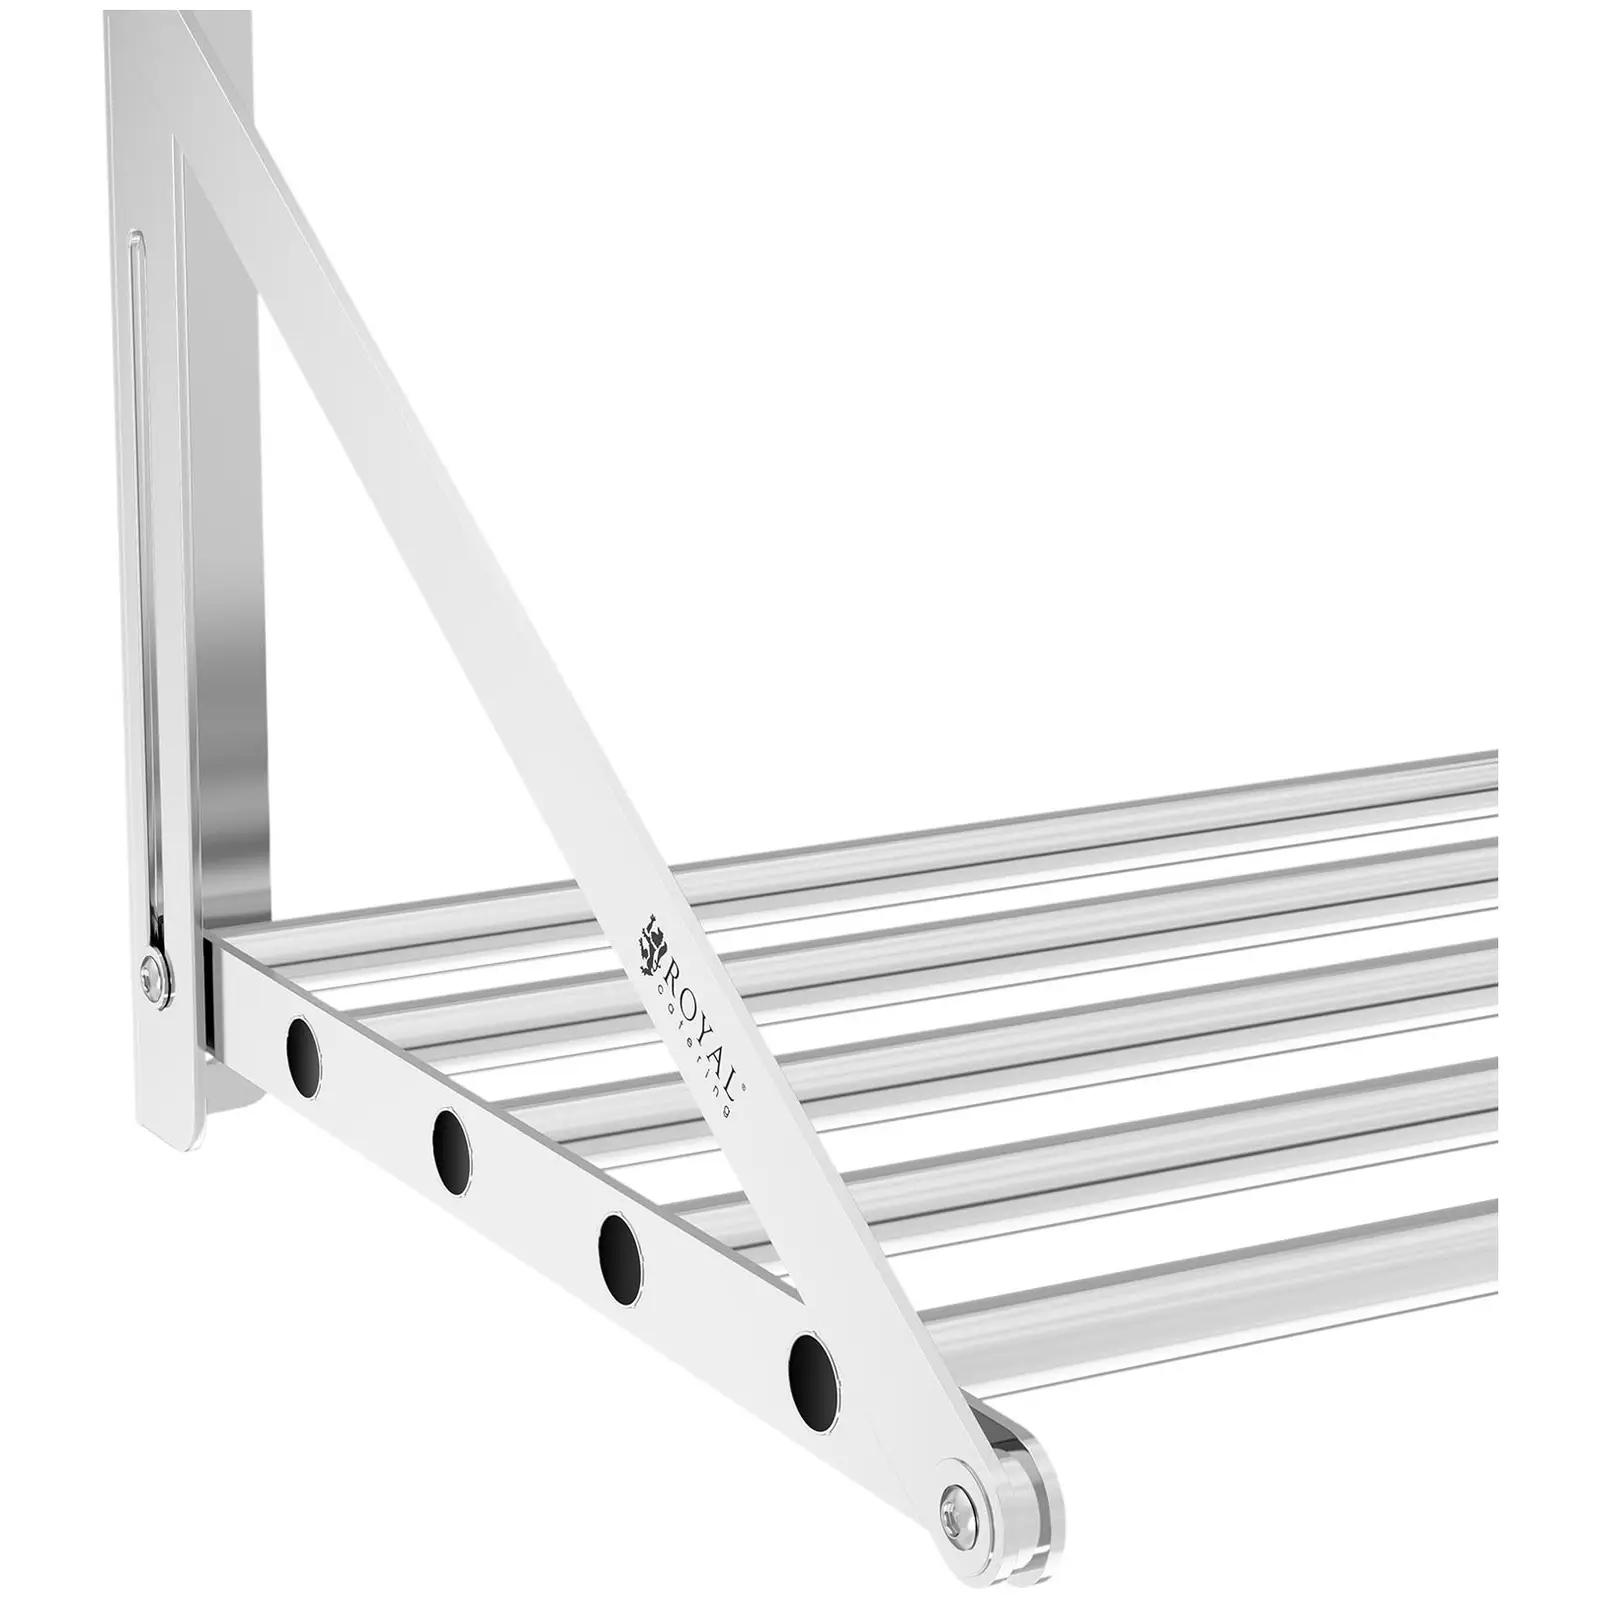 Wall shelf - foldable - bar design - 60 x 45 cm - 40 kg - stainless steel